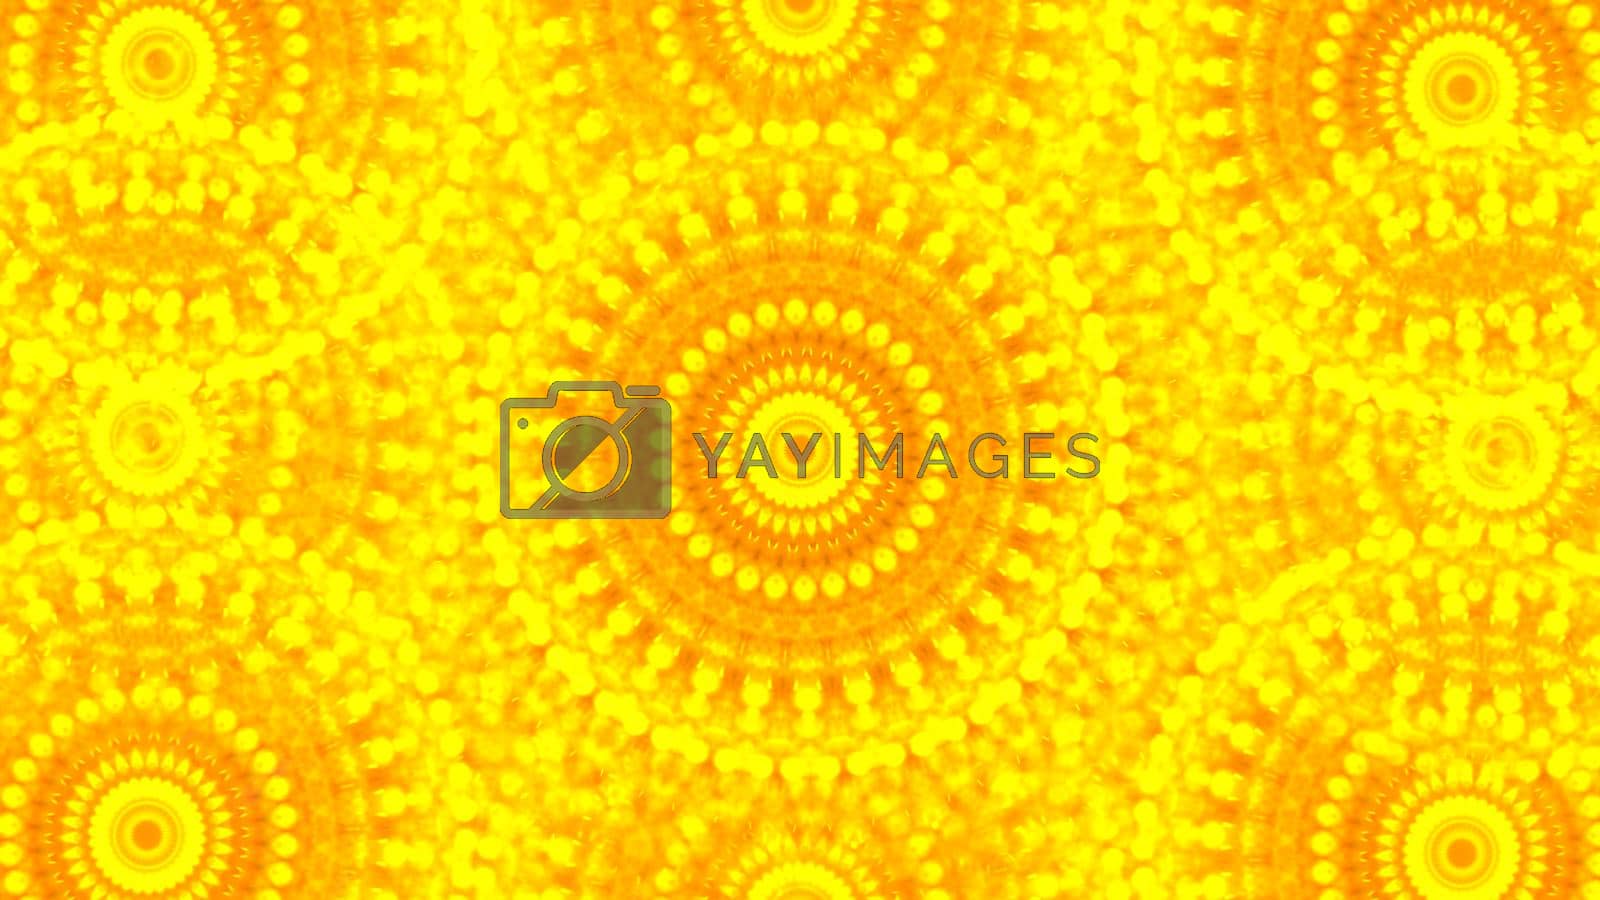 Royalty free image of Golden sunny mandala symmetry pattern, abstract design, background. Textured yellow effect, seamless design, kaleidoscope. by kristina_kokhanova